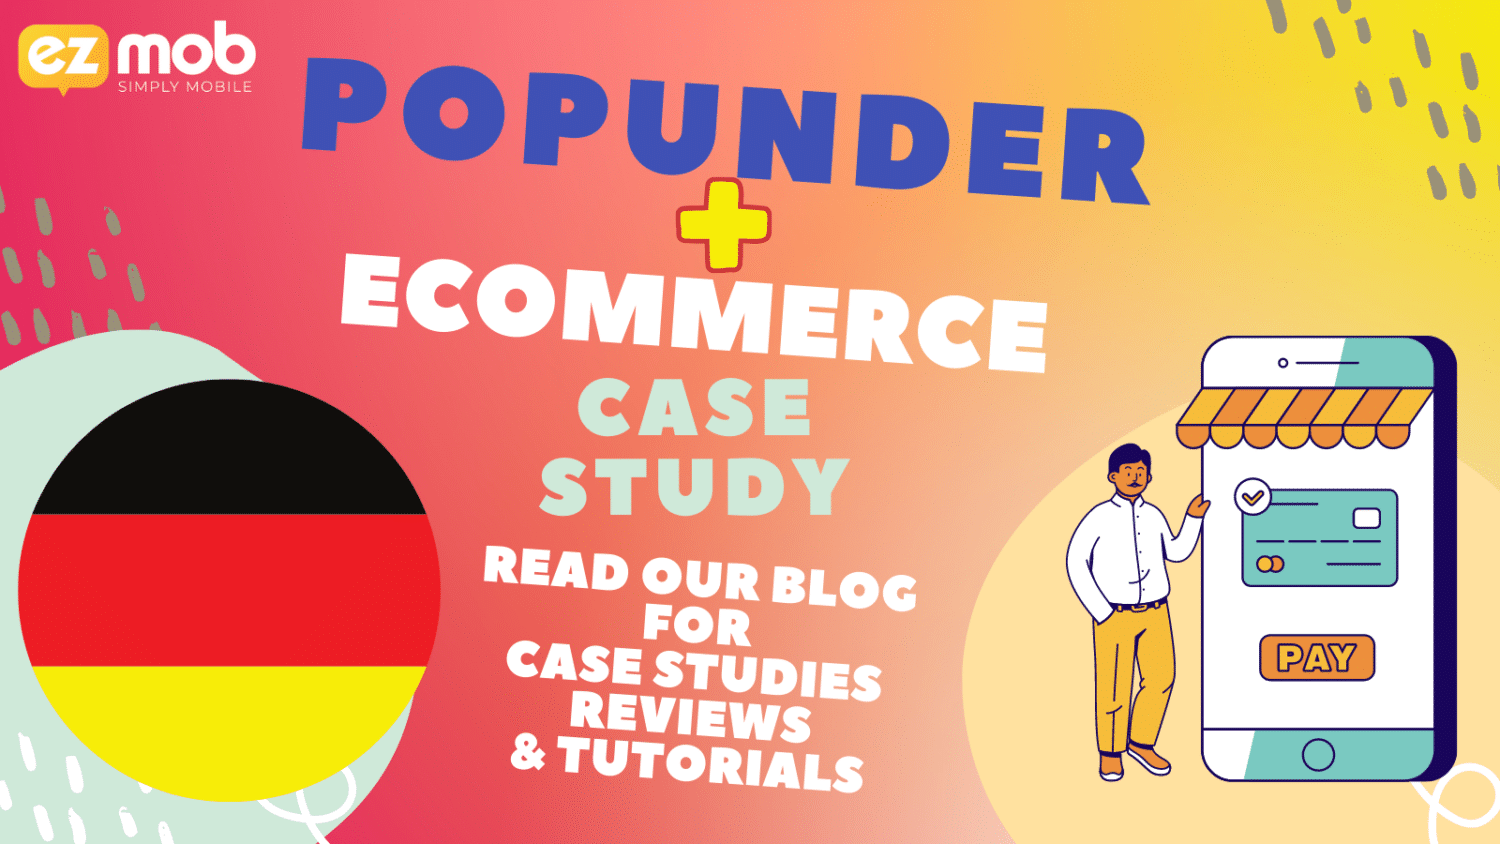 [case studies] popunder ecommerce review